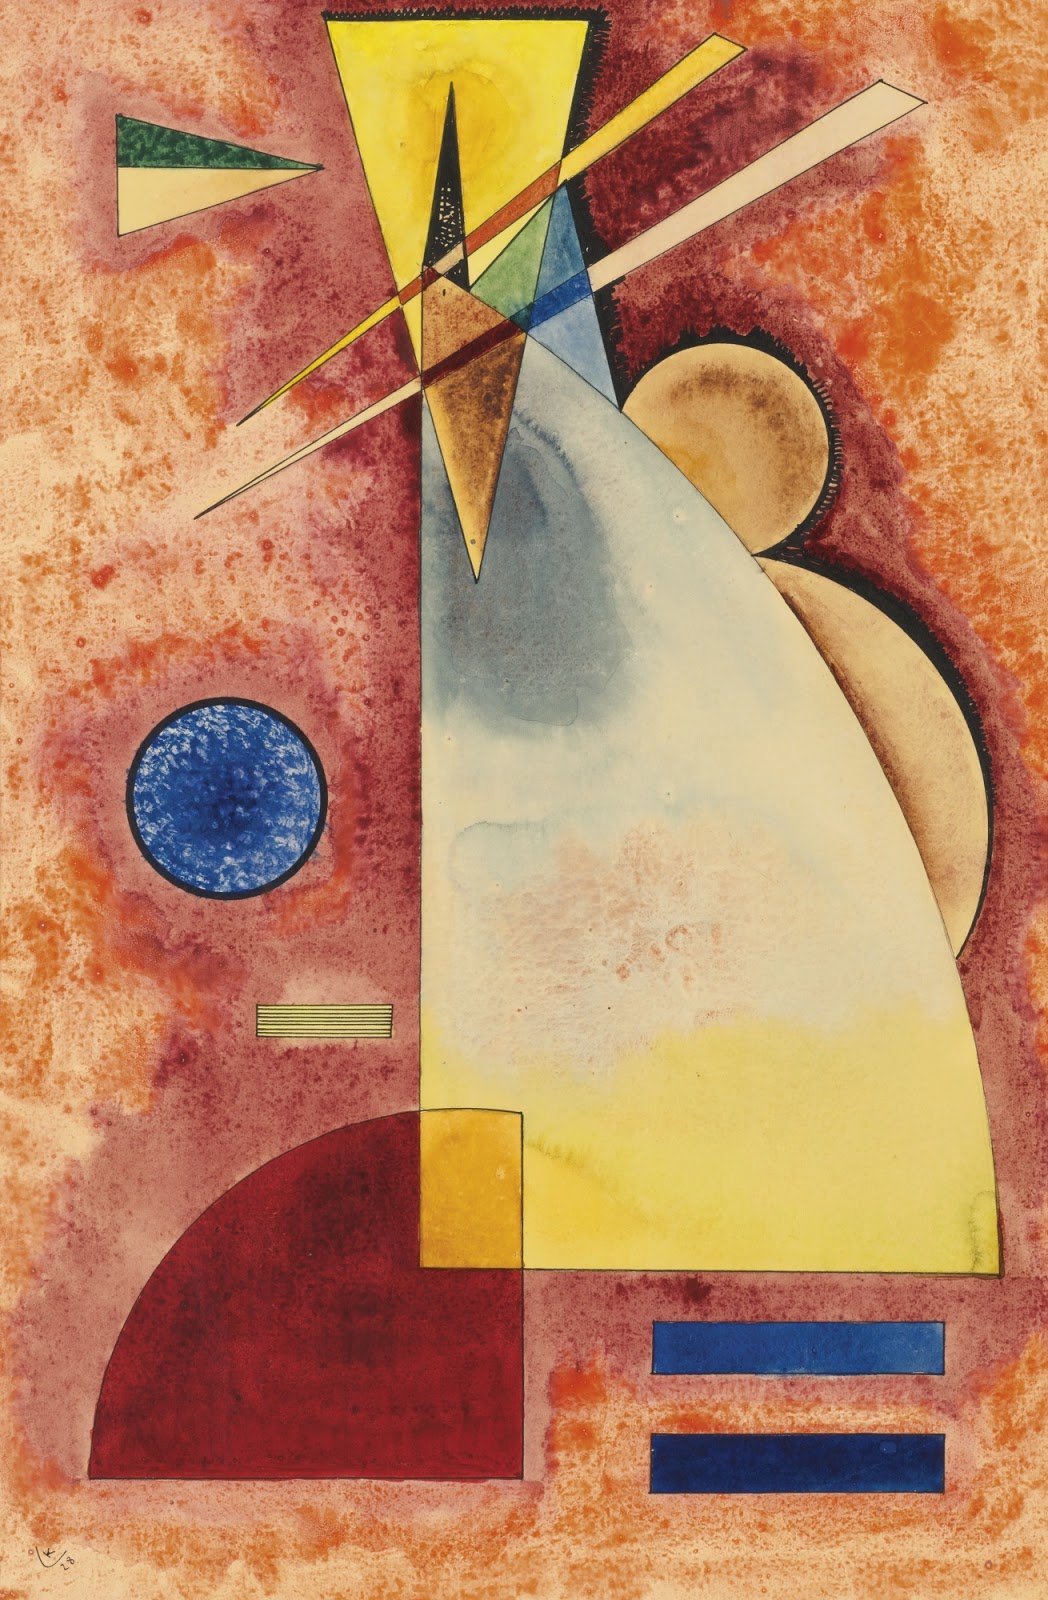 Wassily+Kandinsky-1866-1944 (383).jpg